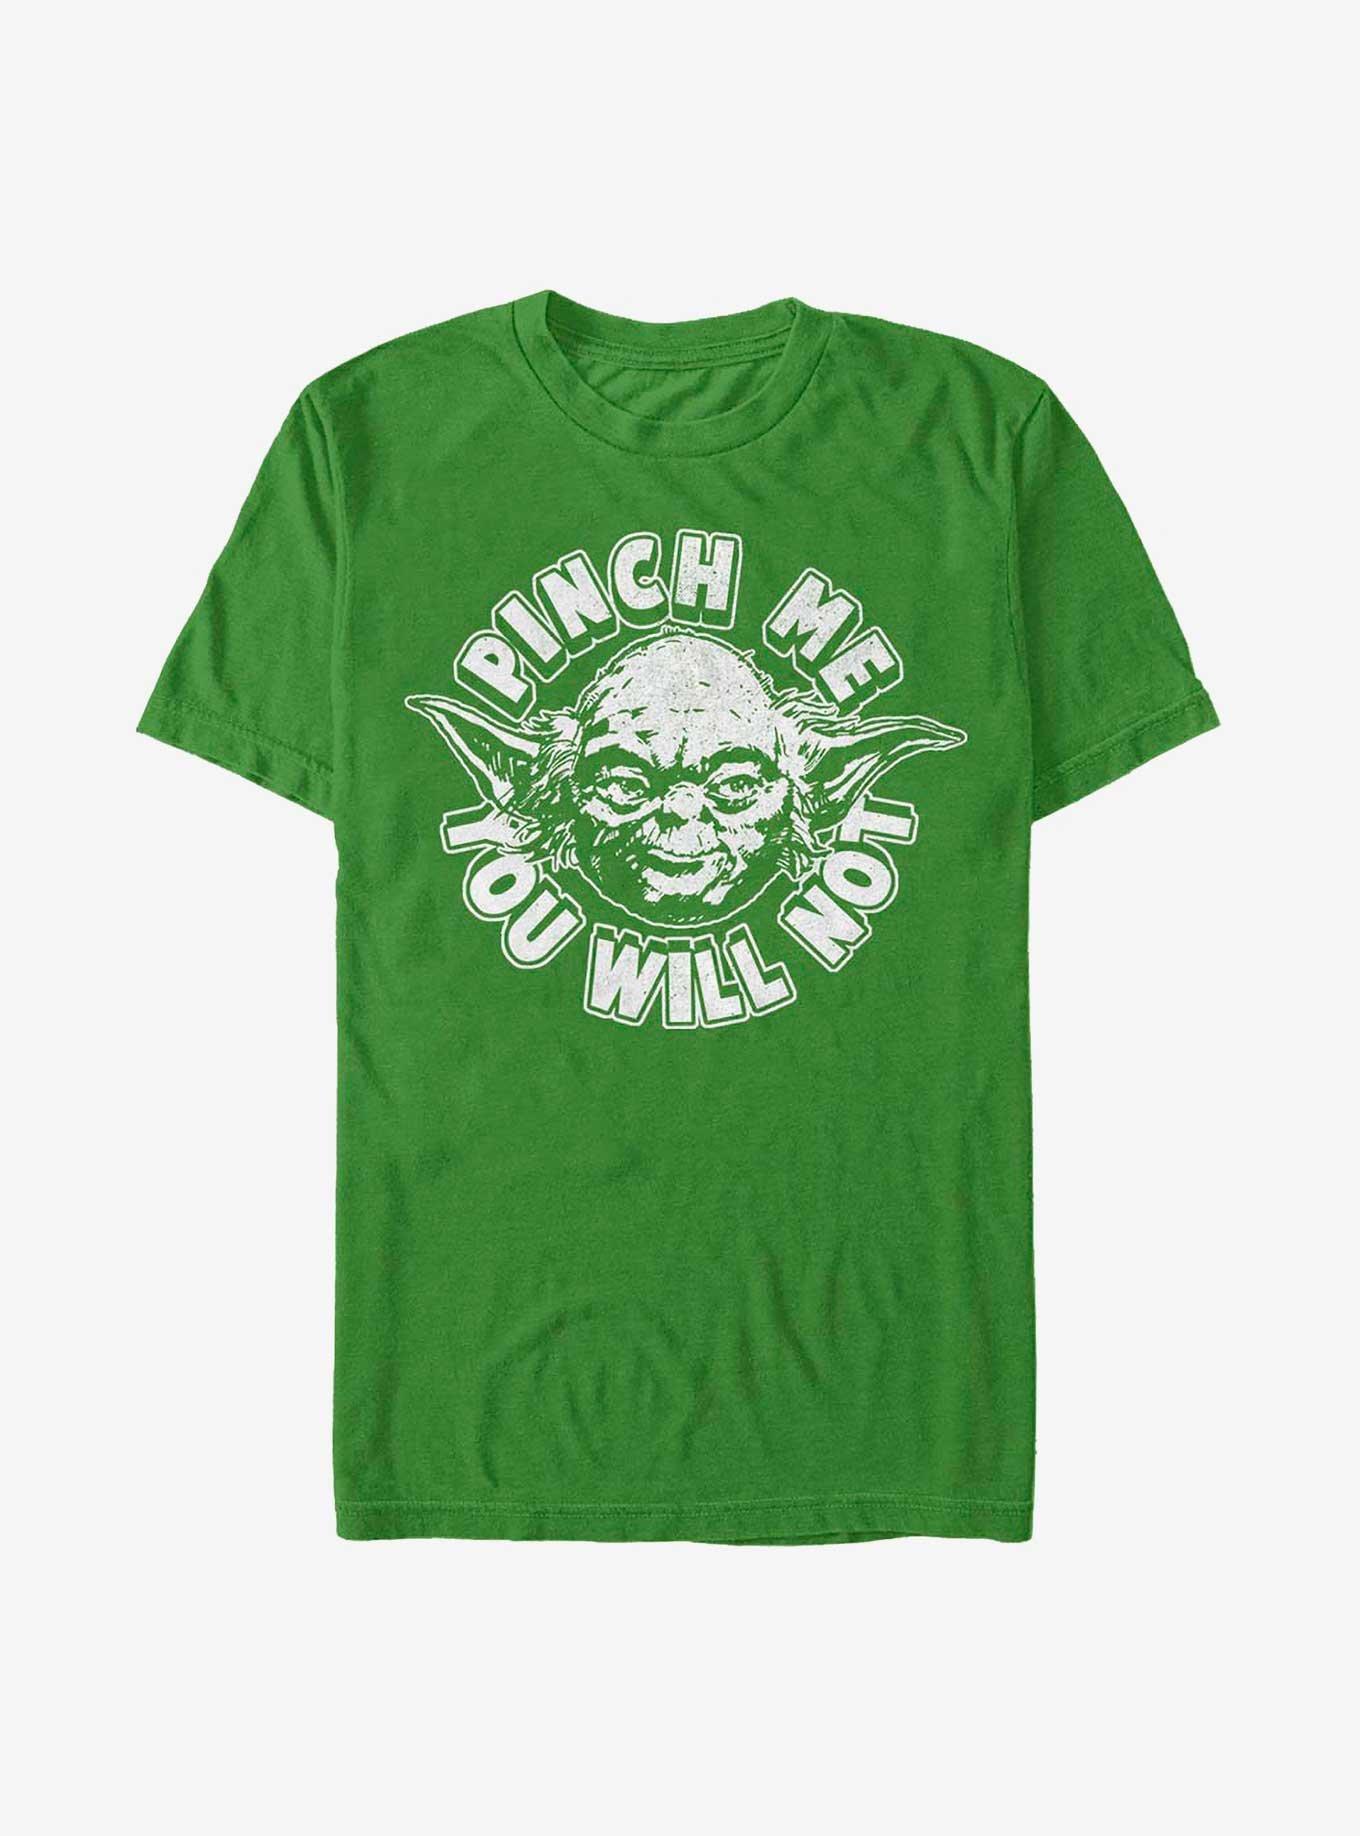 Star Wars Yoda Pinch Me You Will Not T-Shirt, KELLY, hi-res